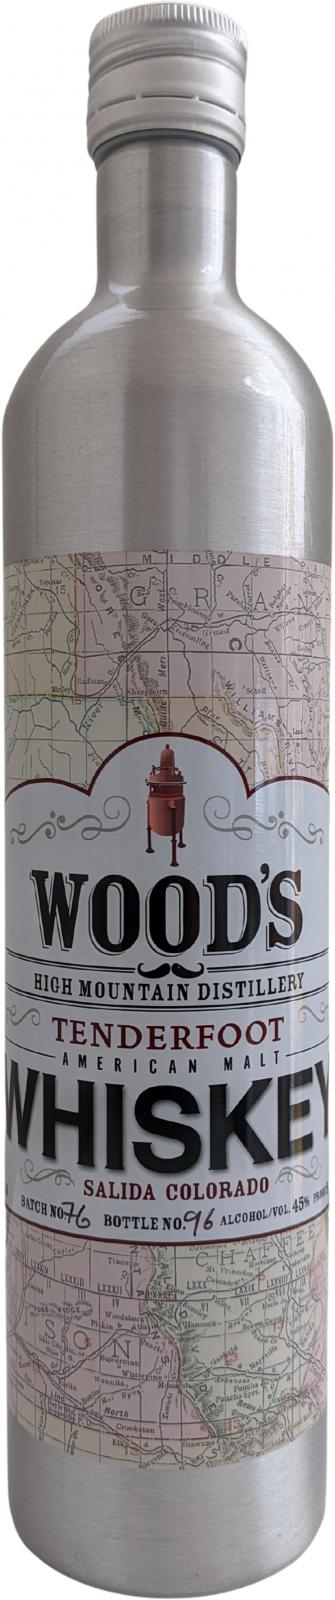 Wood's Tenderfoot Whisky New American White Oak barrels 45% 750ml